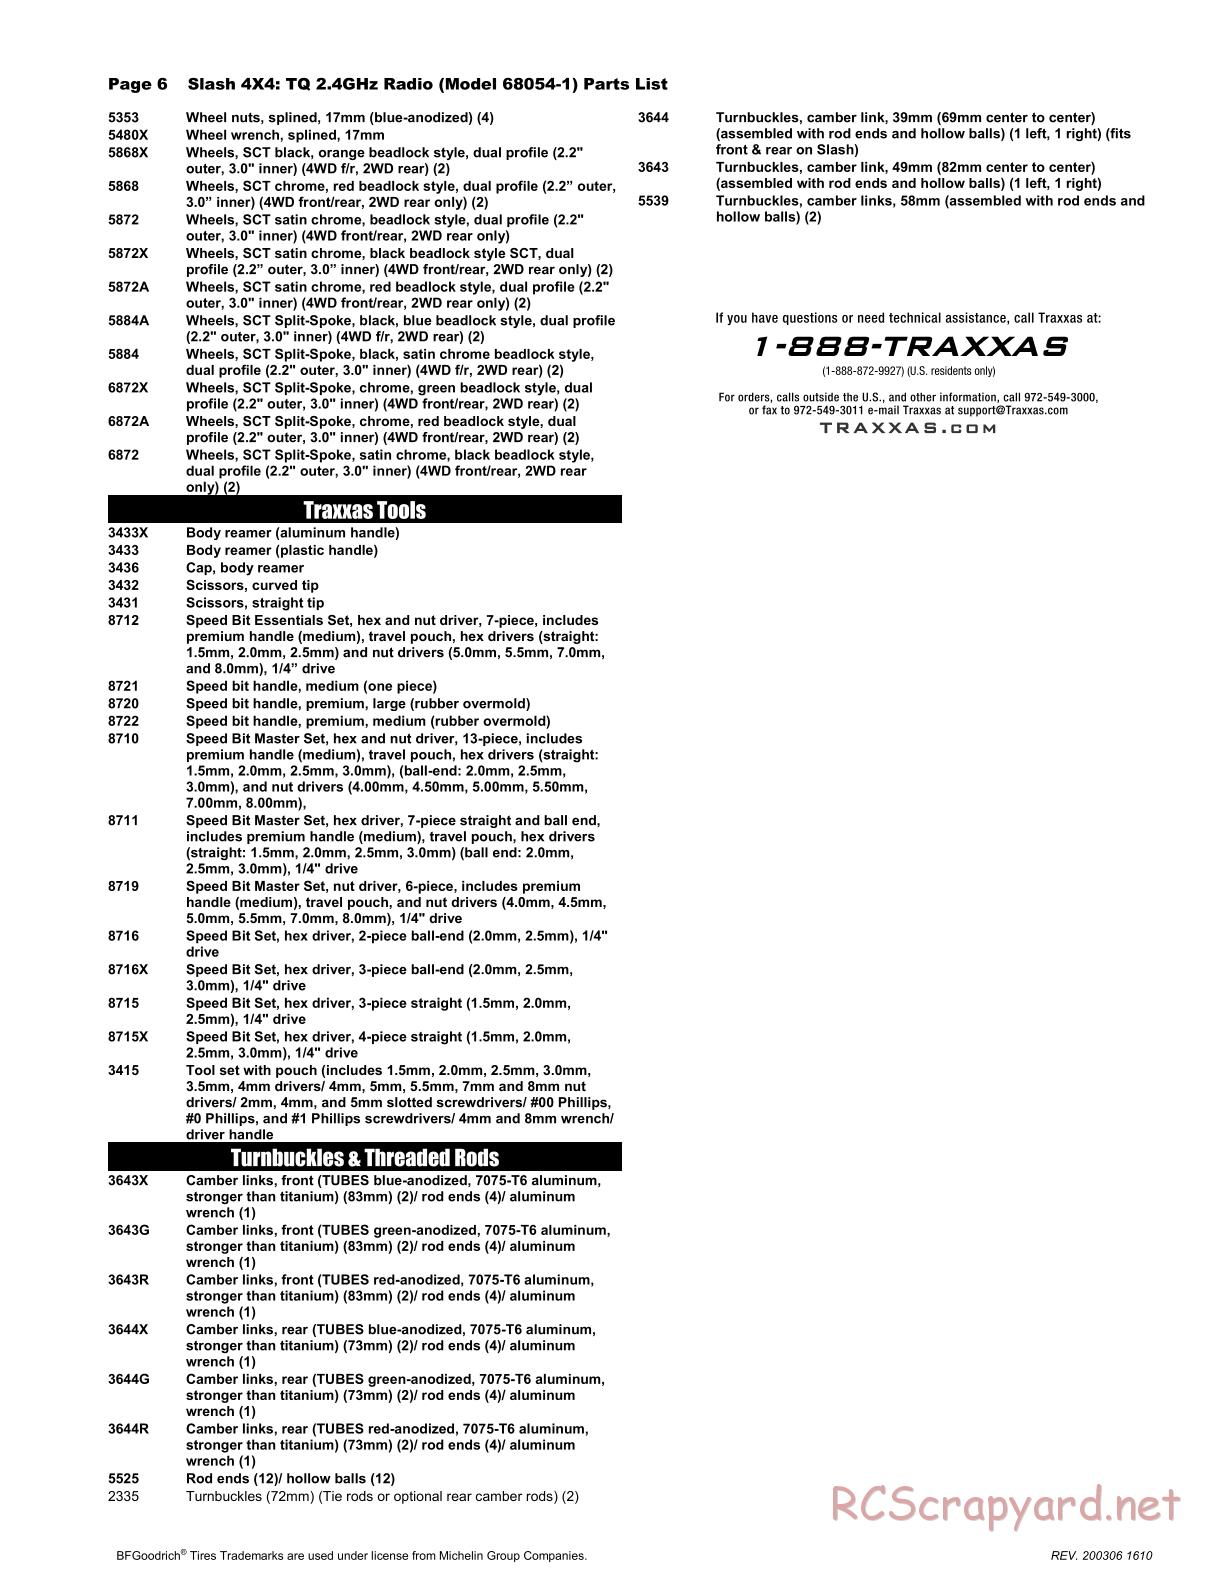 Traxxas - Slash 4x4 Brushed - Parts List - Page 6